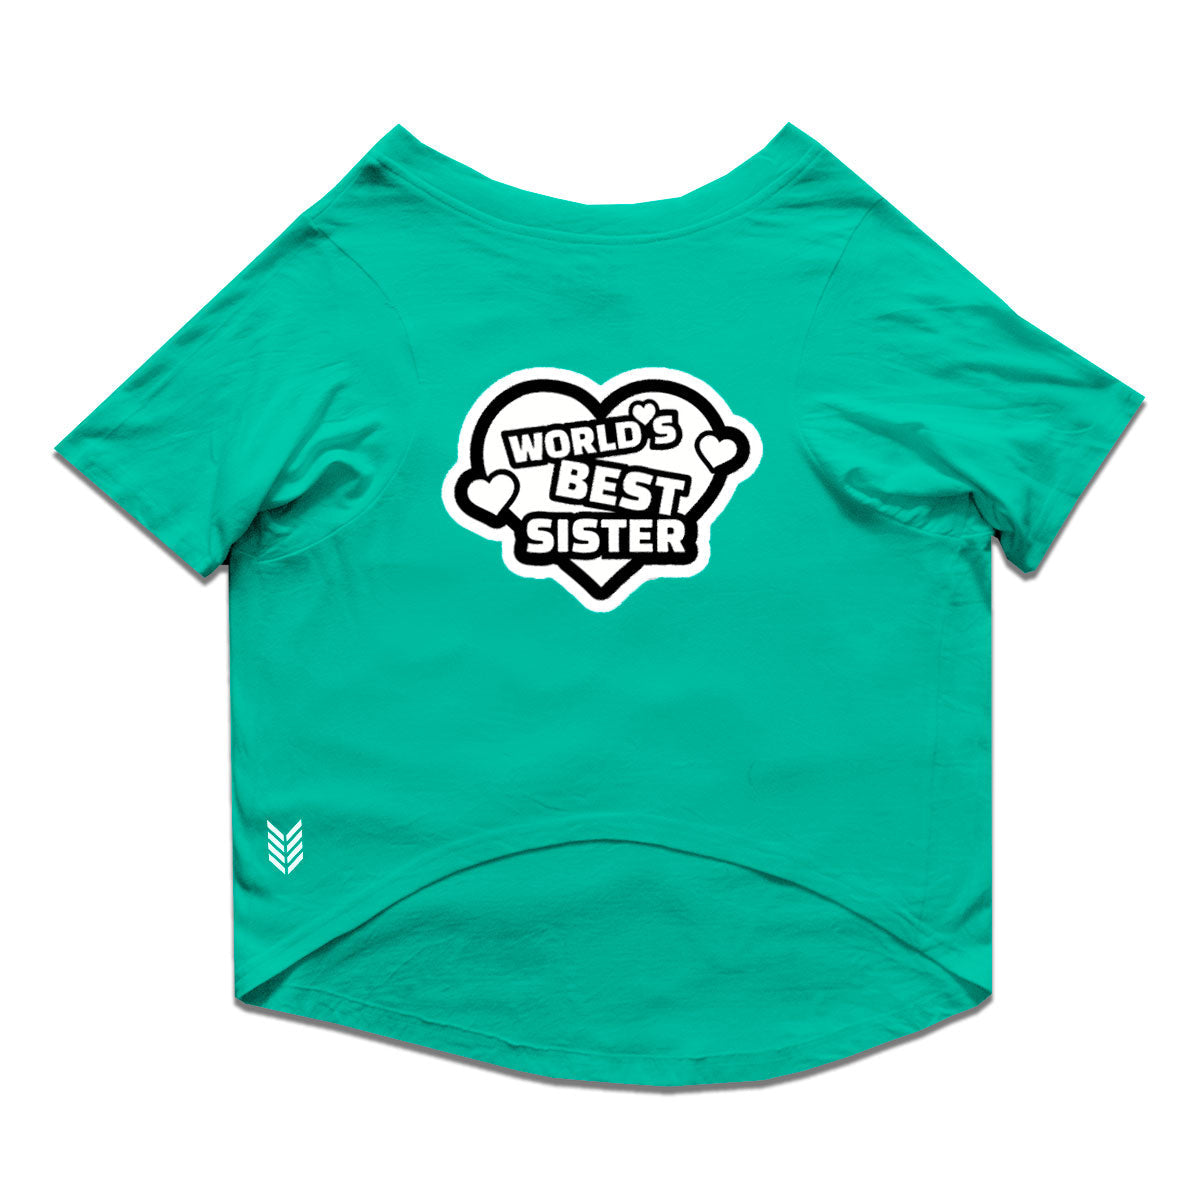 Ruse / Aqua Green Ruse Basic Crew Neck "World's Best Sister" Printed Half Sleeves Dog Tee12